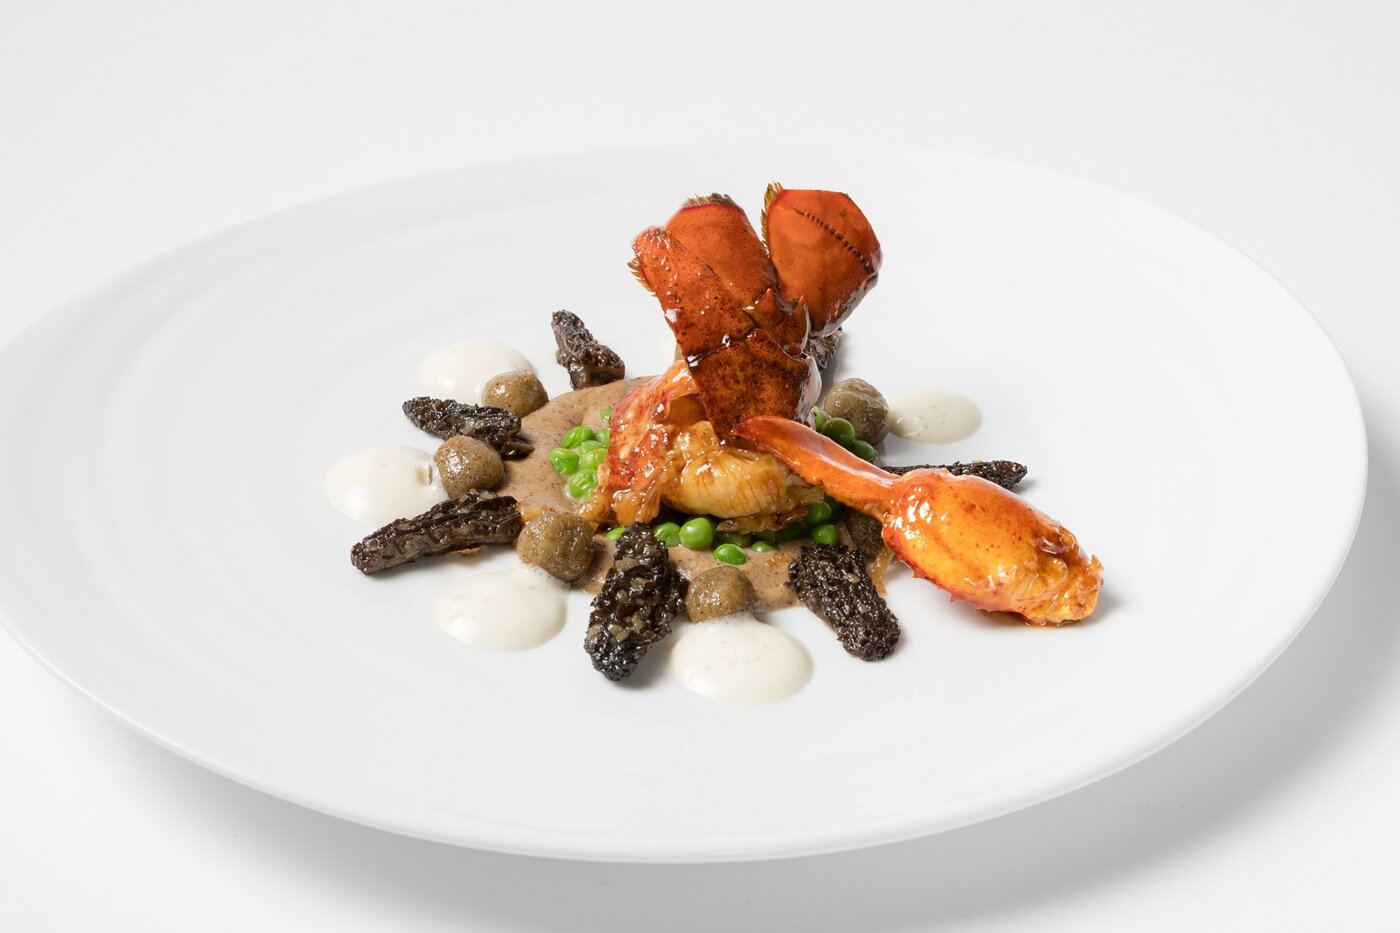 Lobster menu created by Michelin Star Chef Jean-Michel